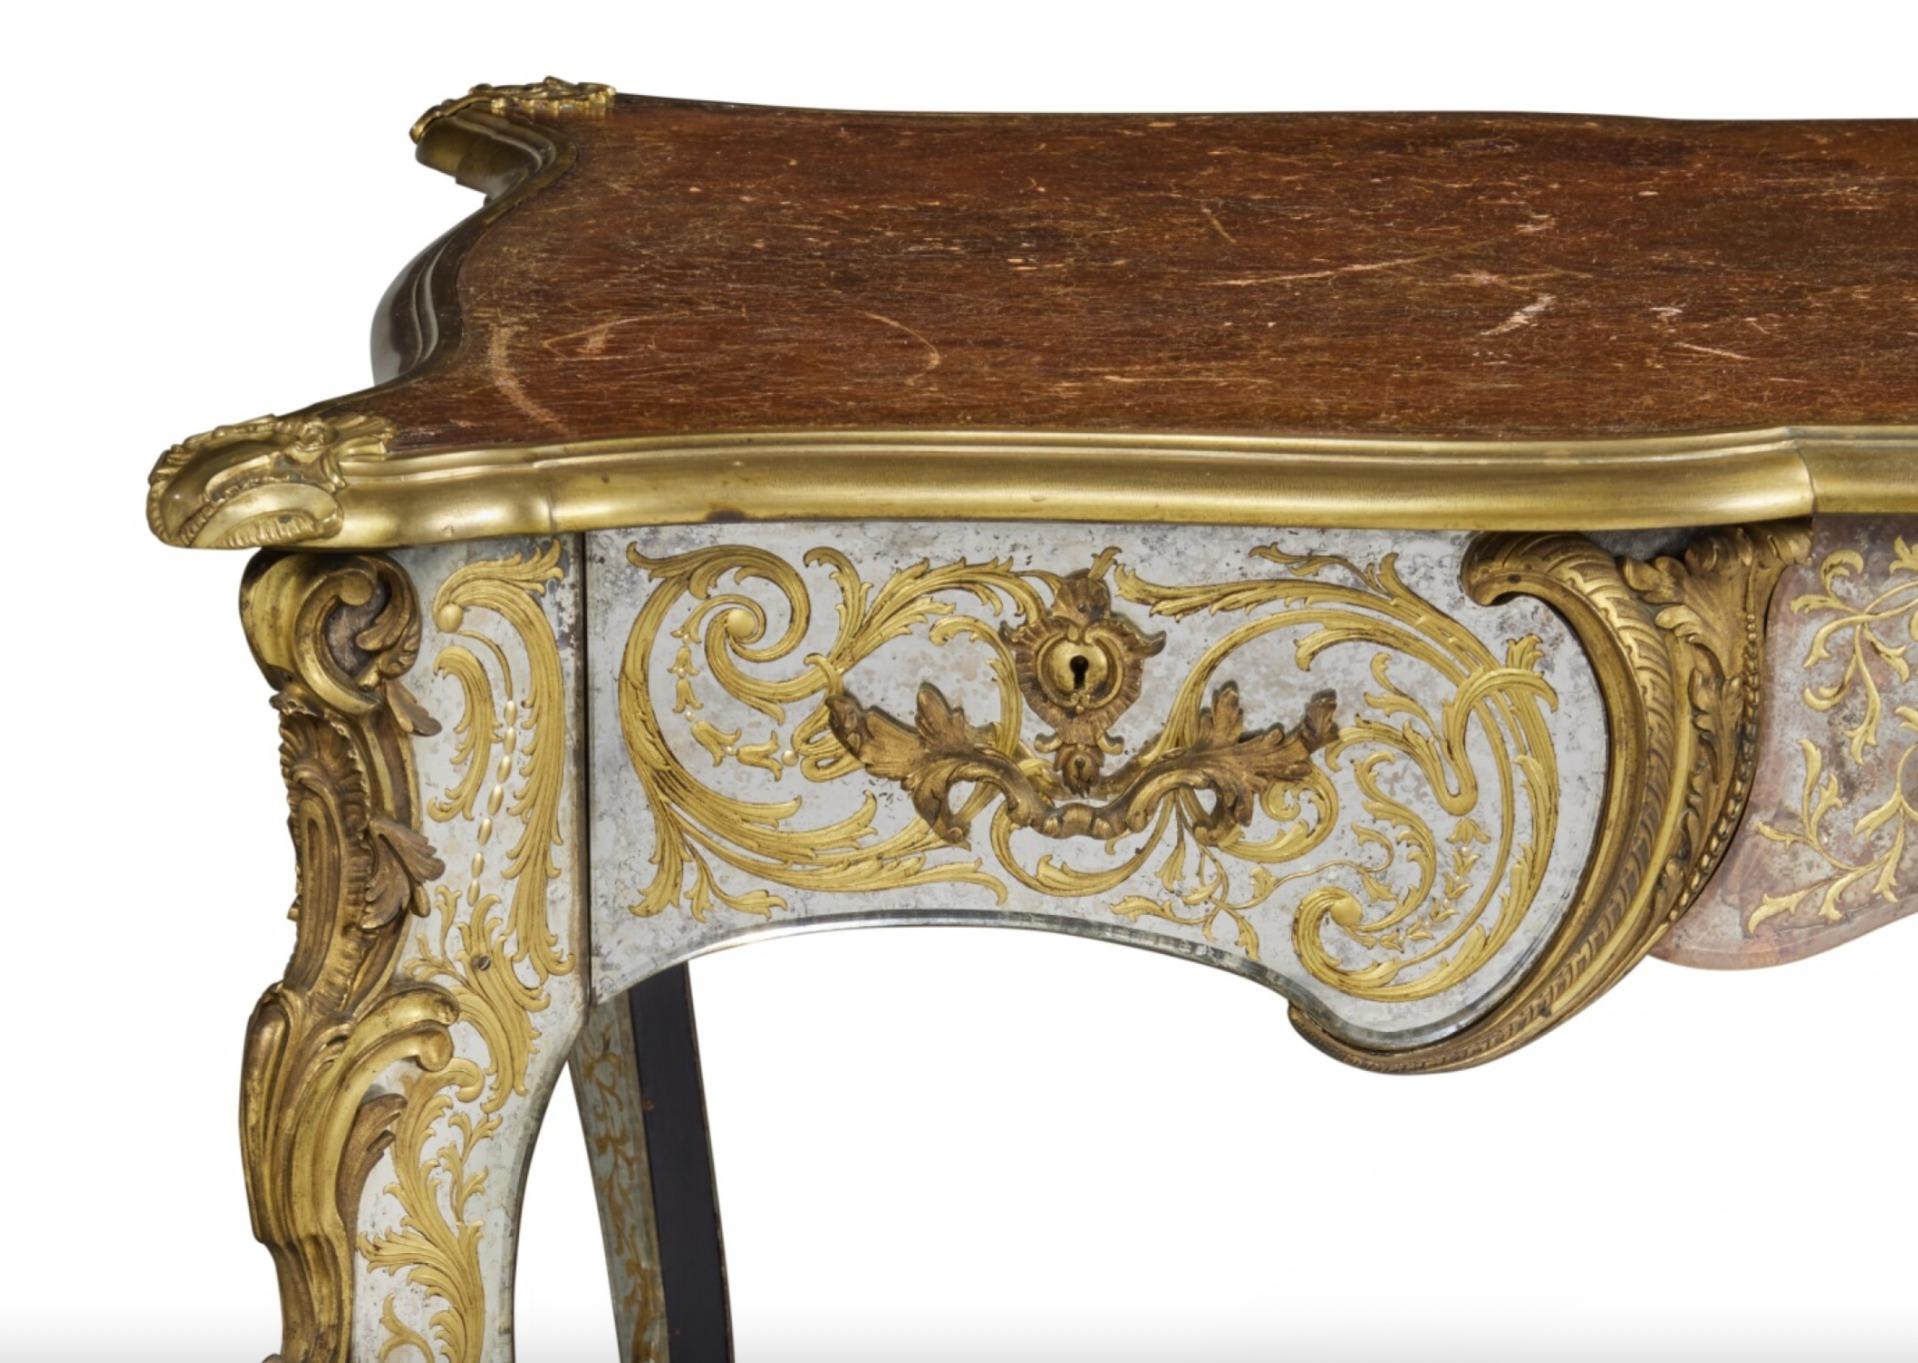 Louis XV The Duke and Duchess of Windsor: An Exquisite Ormolu and Églomisé Bureau Plat For Sale